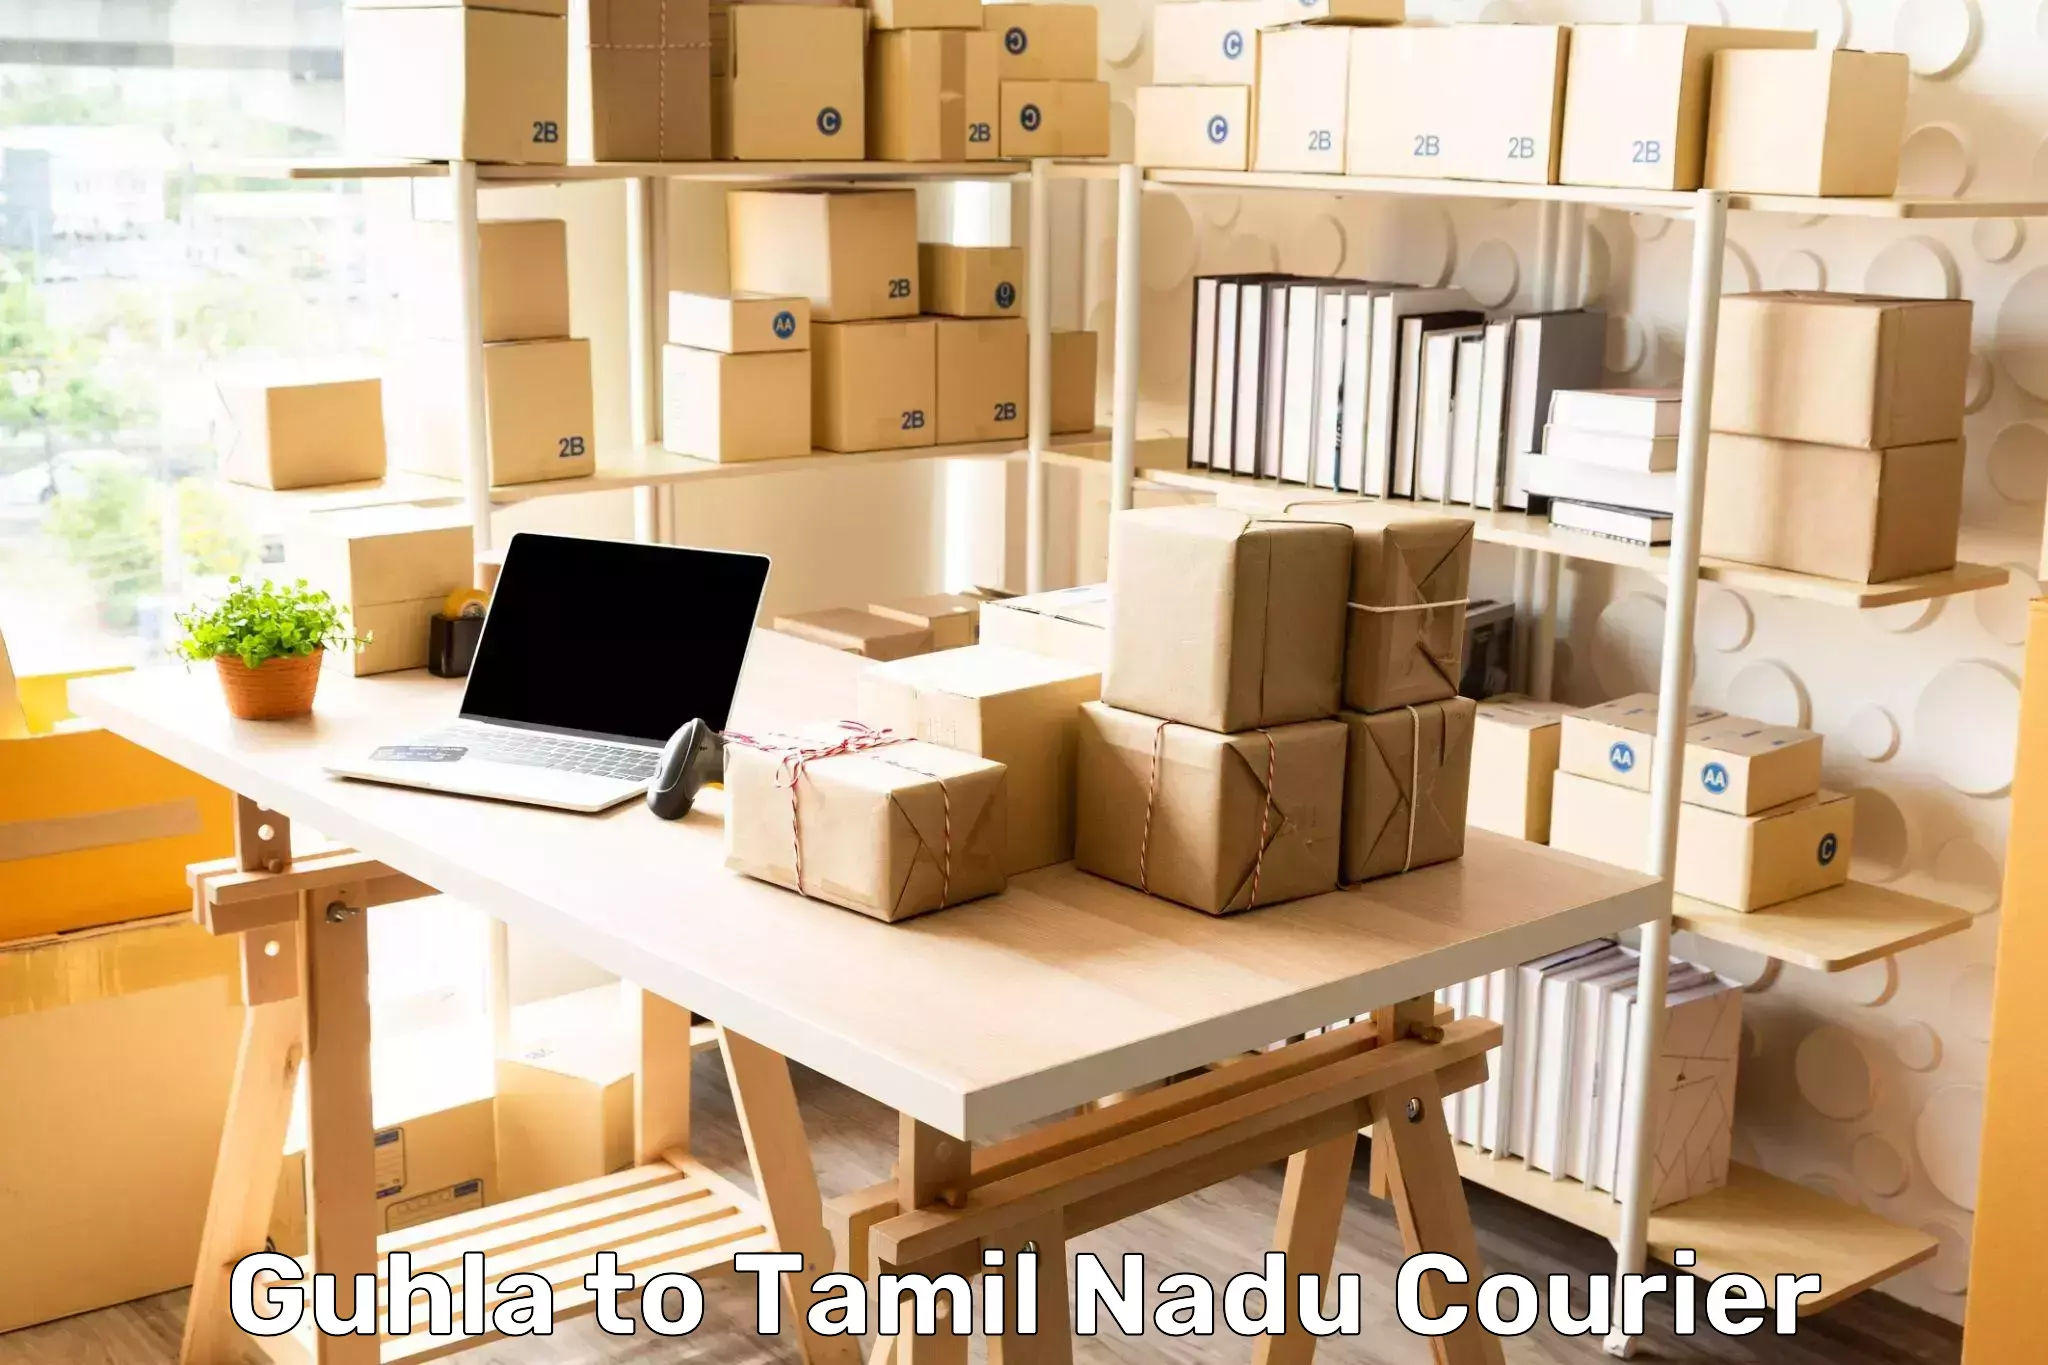 Doorstep delivery service Guhla to Tamil Nadu